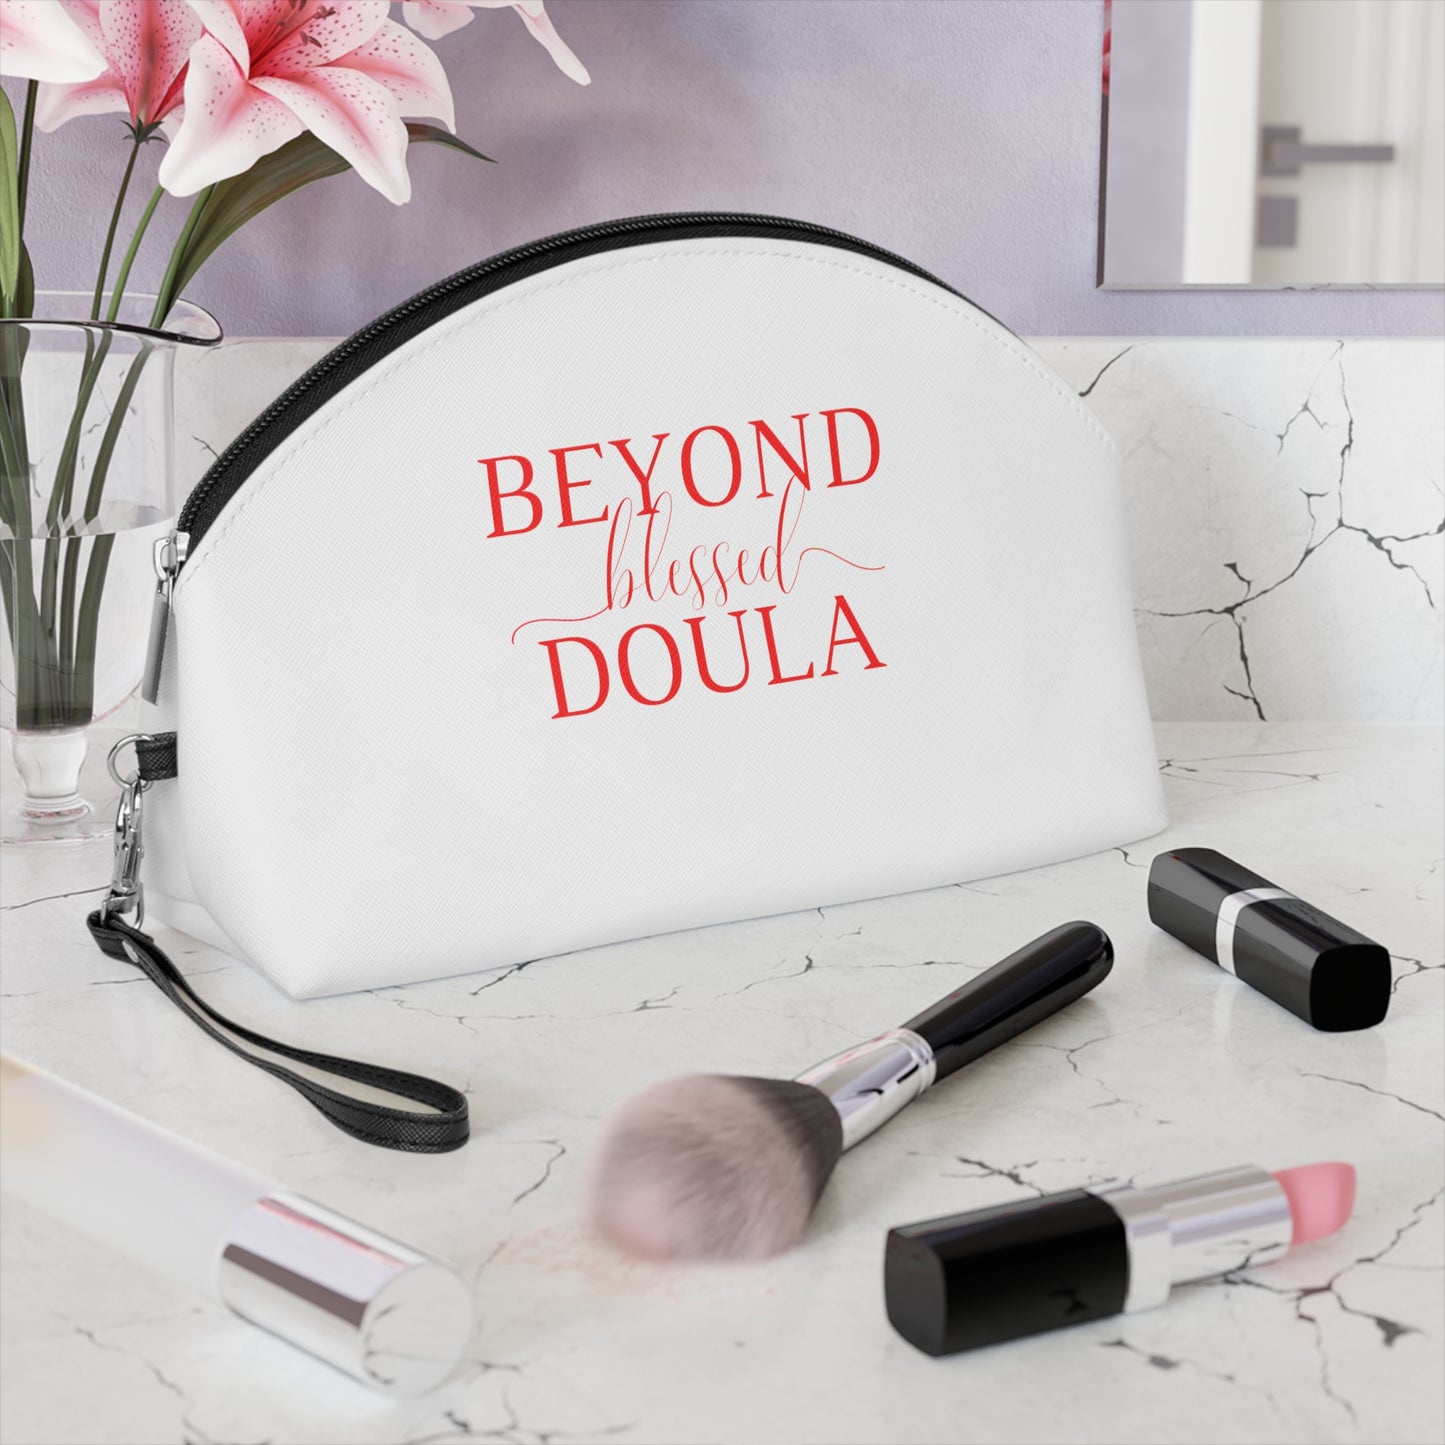 Beyond Blessed Doula - Makeup Bag